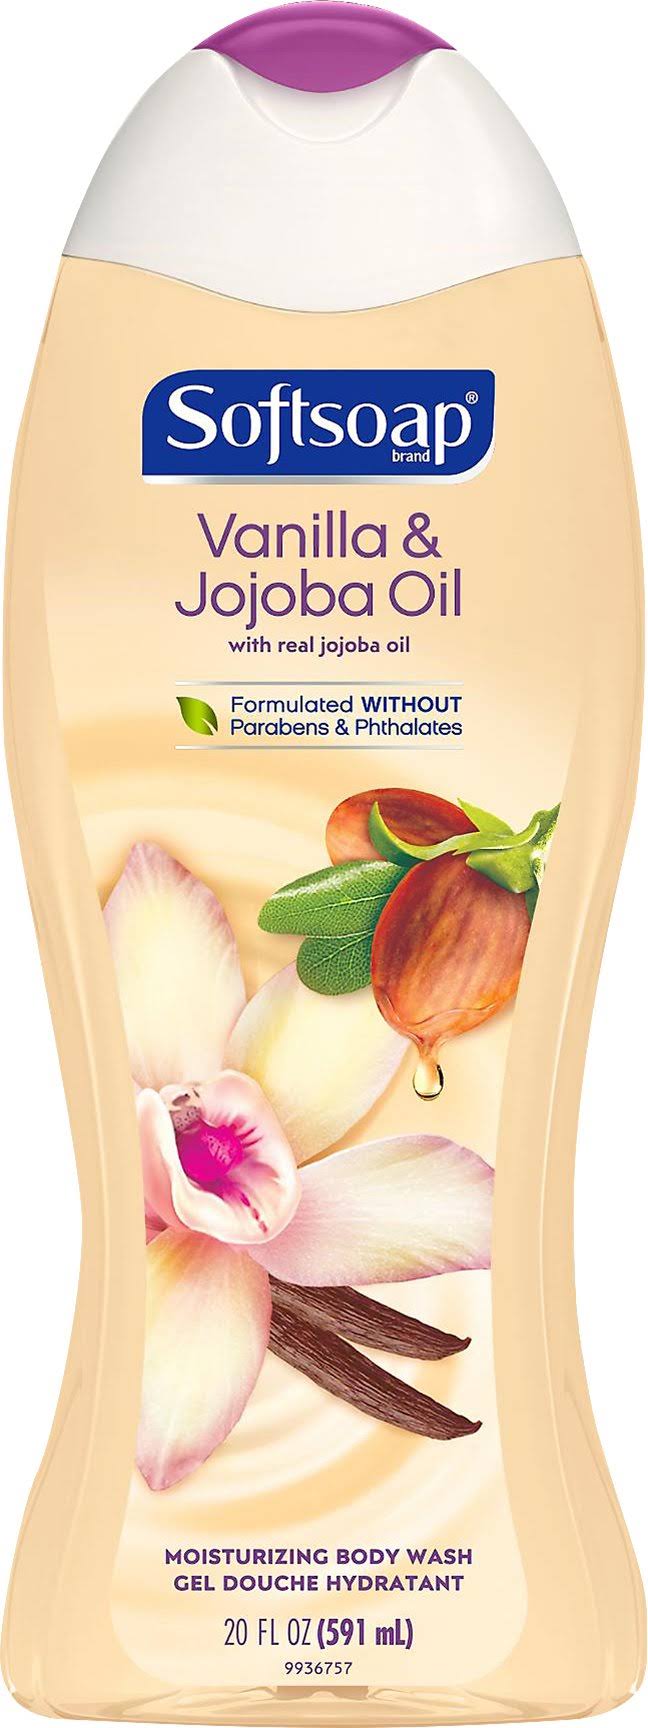 Softsoap Body Wash, Moisturizing, Vanilla & Jojoba Oil - 20 fl oz